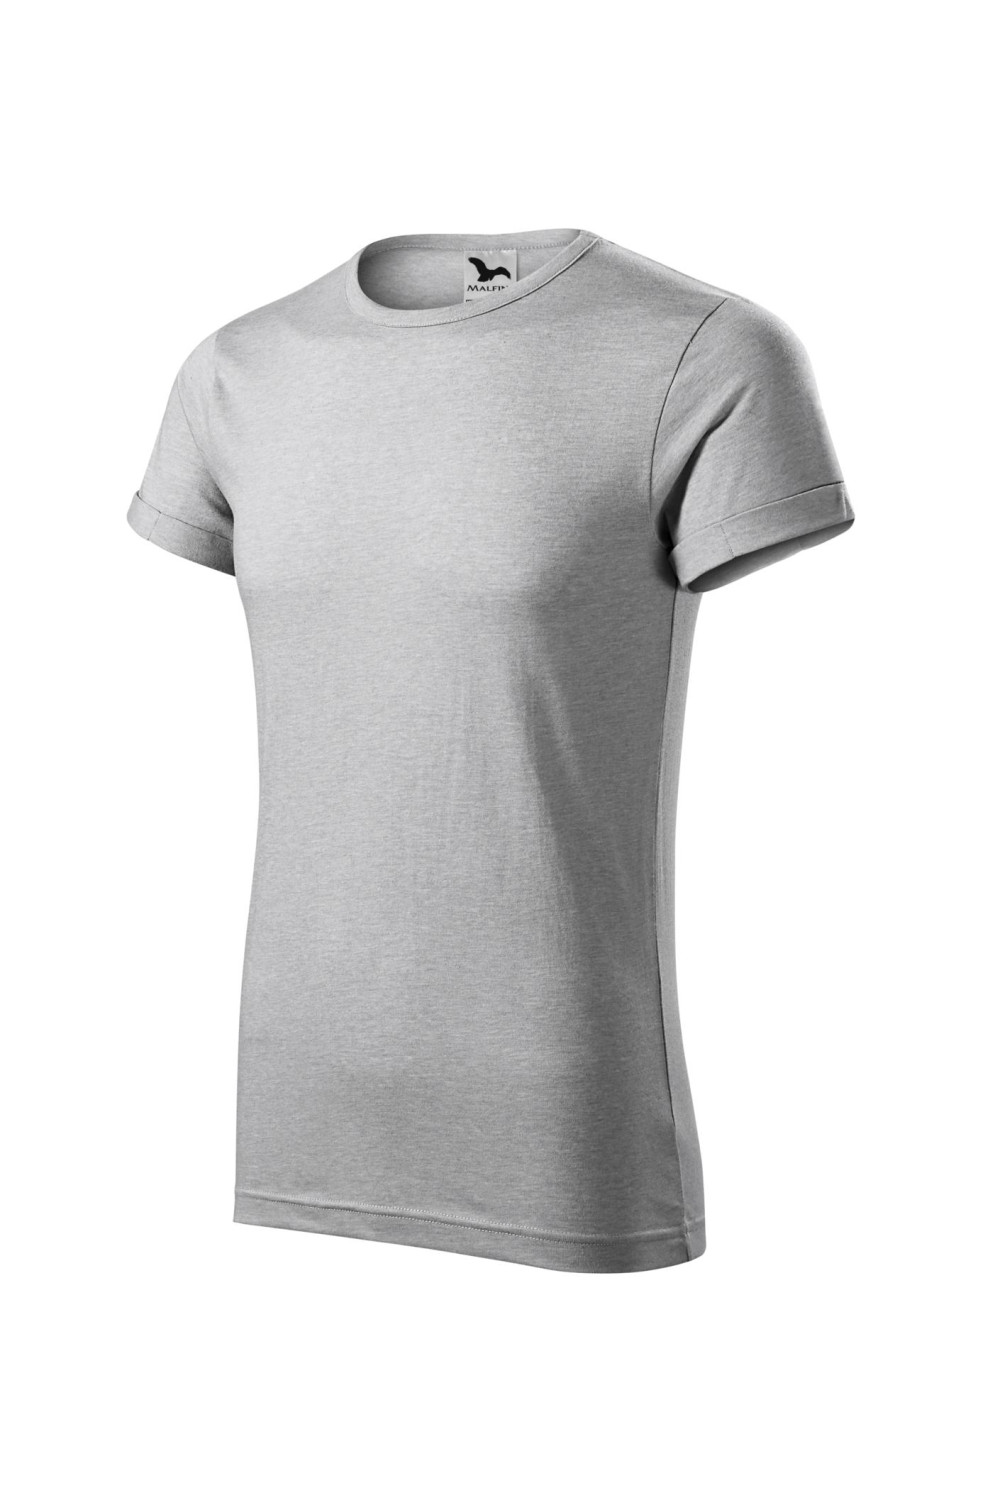 Koszulka męska melanżowa FUSION 163 koszulki / T-shirt srebrny melanż M3